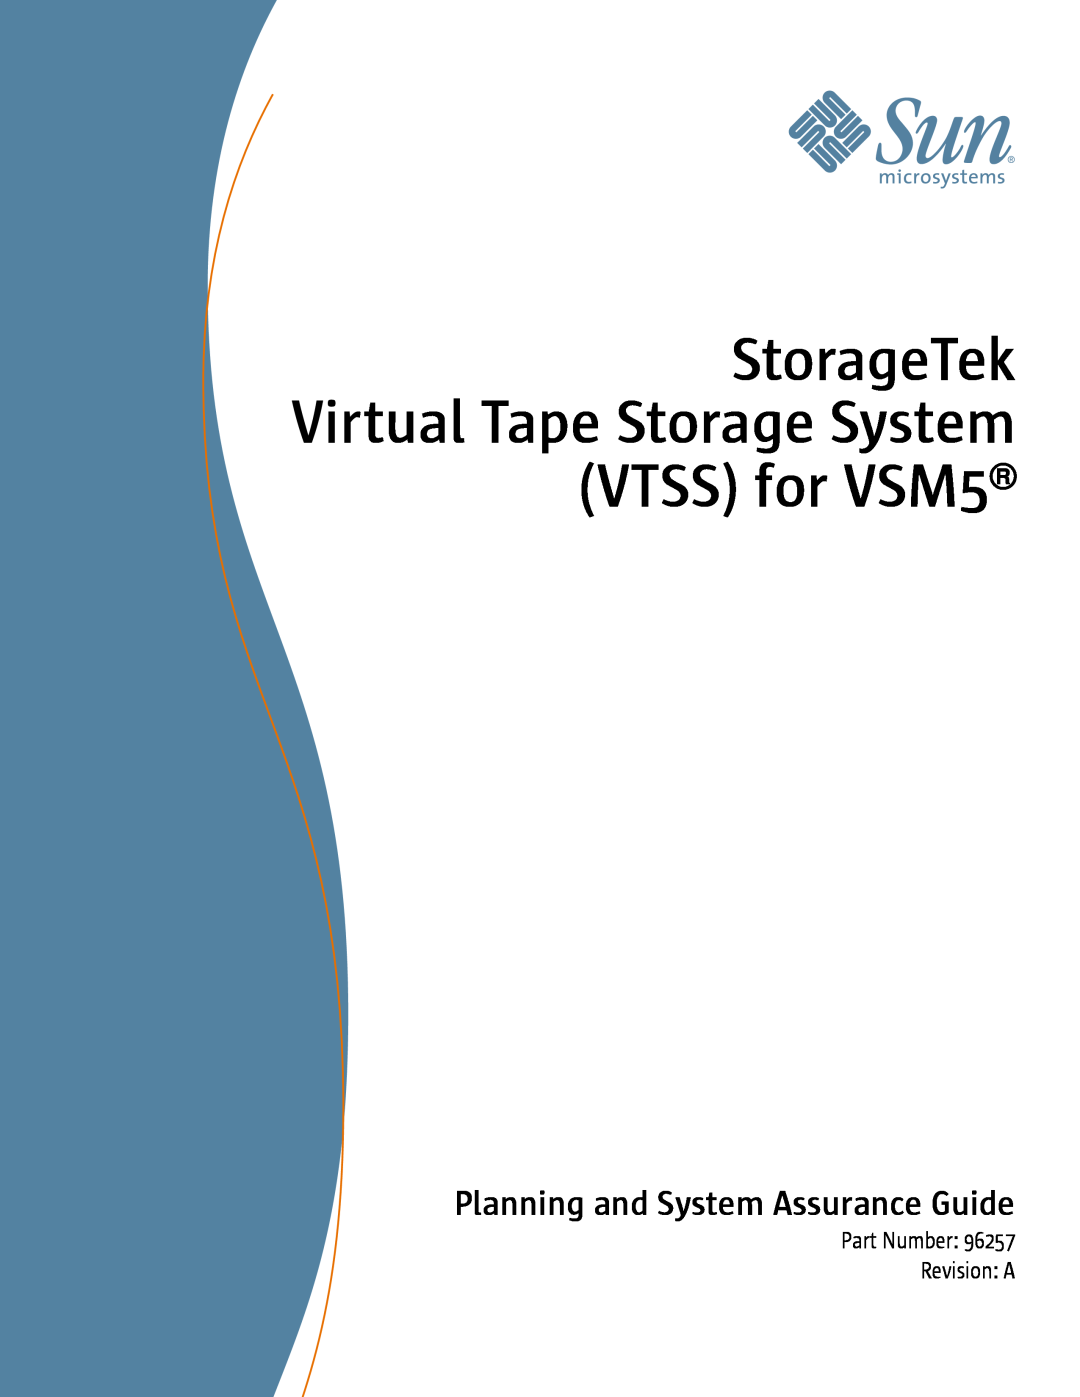 Sun Microsystems 96257 manual Planning and System Assurance Guide, StorageTek, VTSS for VSM5, Virtual Tape Storage System 